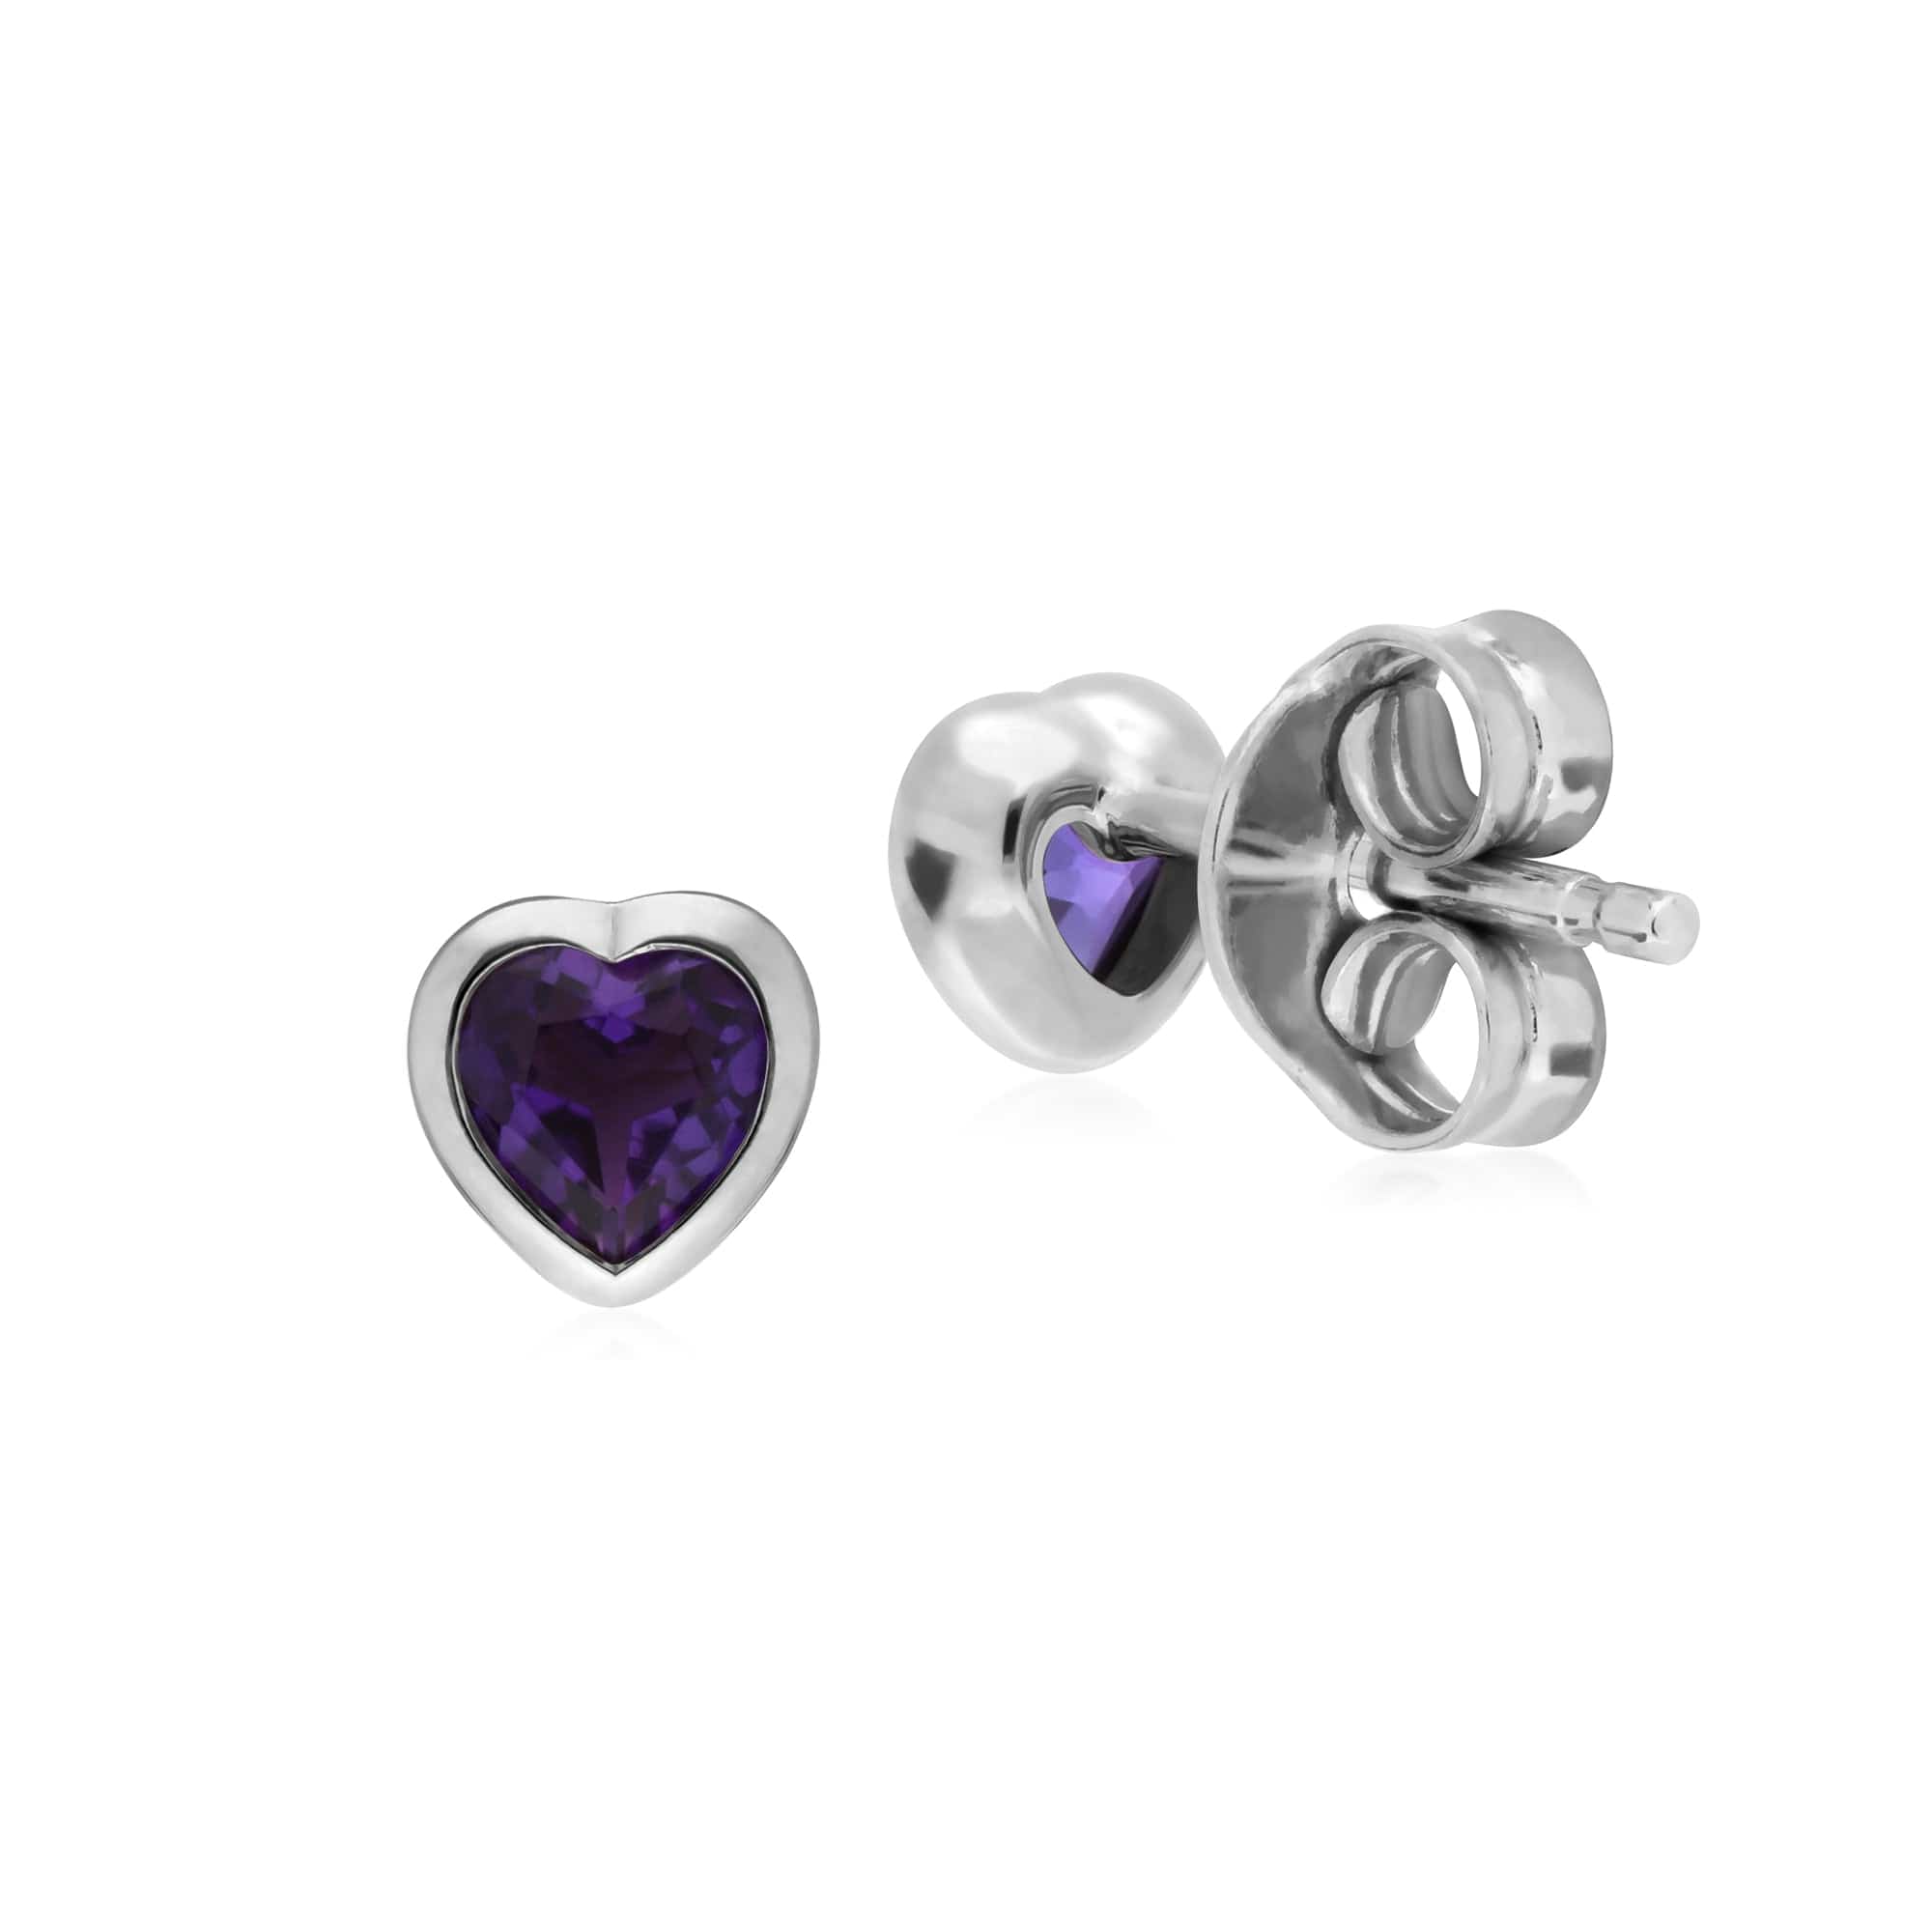 Essential Heart Shaped Amethyst Stud Earrings in 925 Sterling Silver 4.5mm - Gemondo